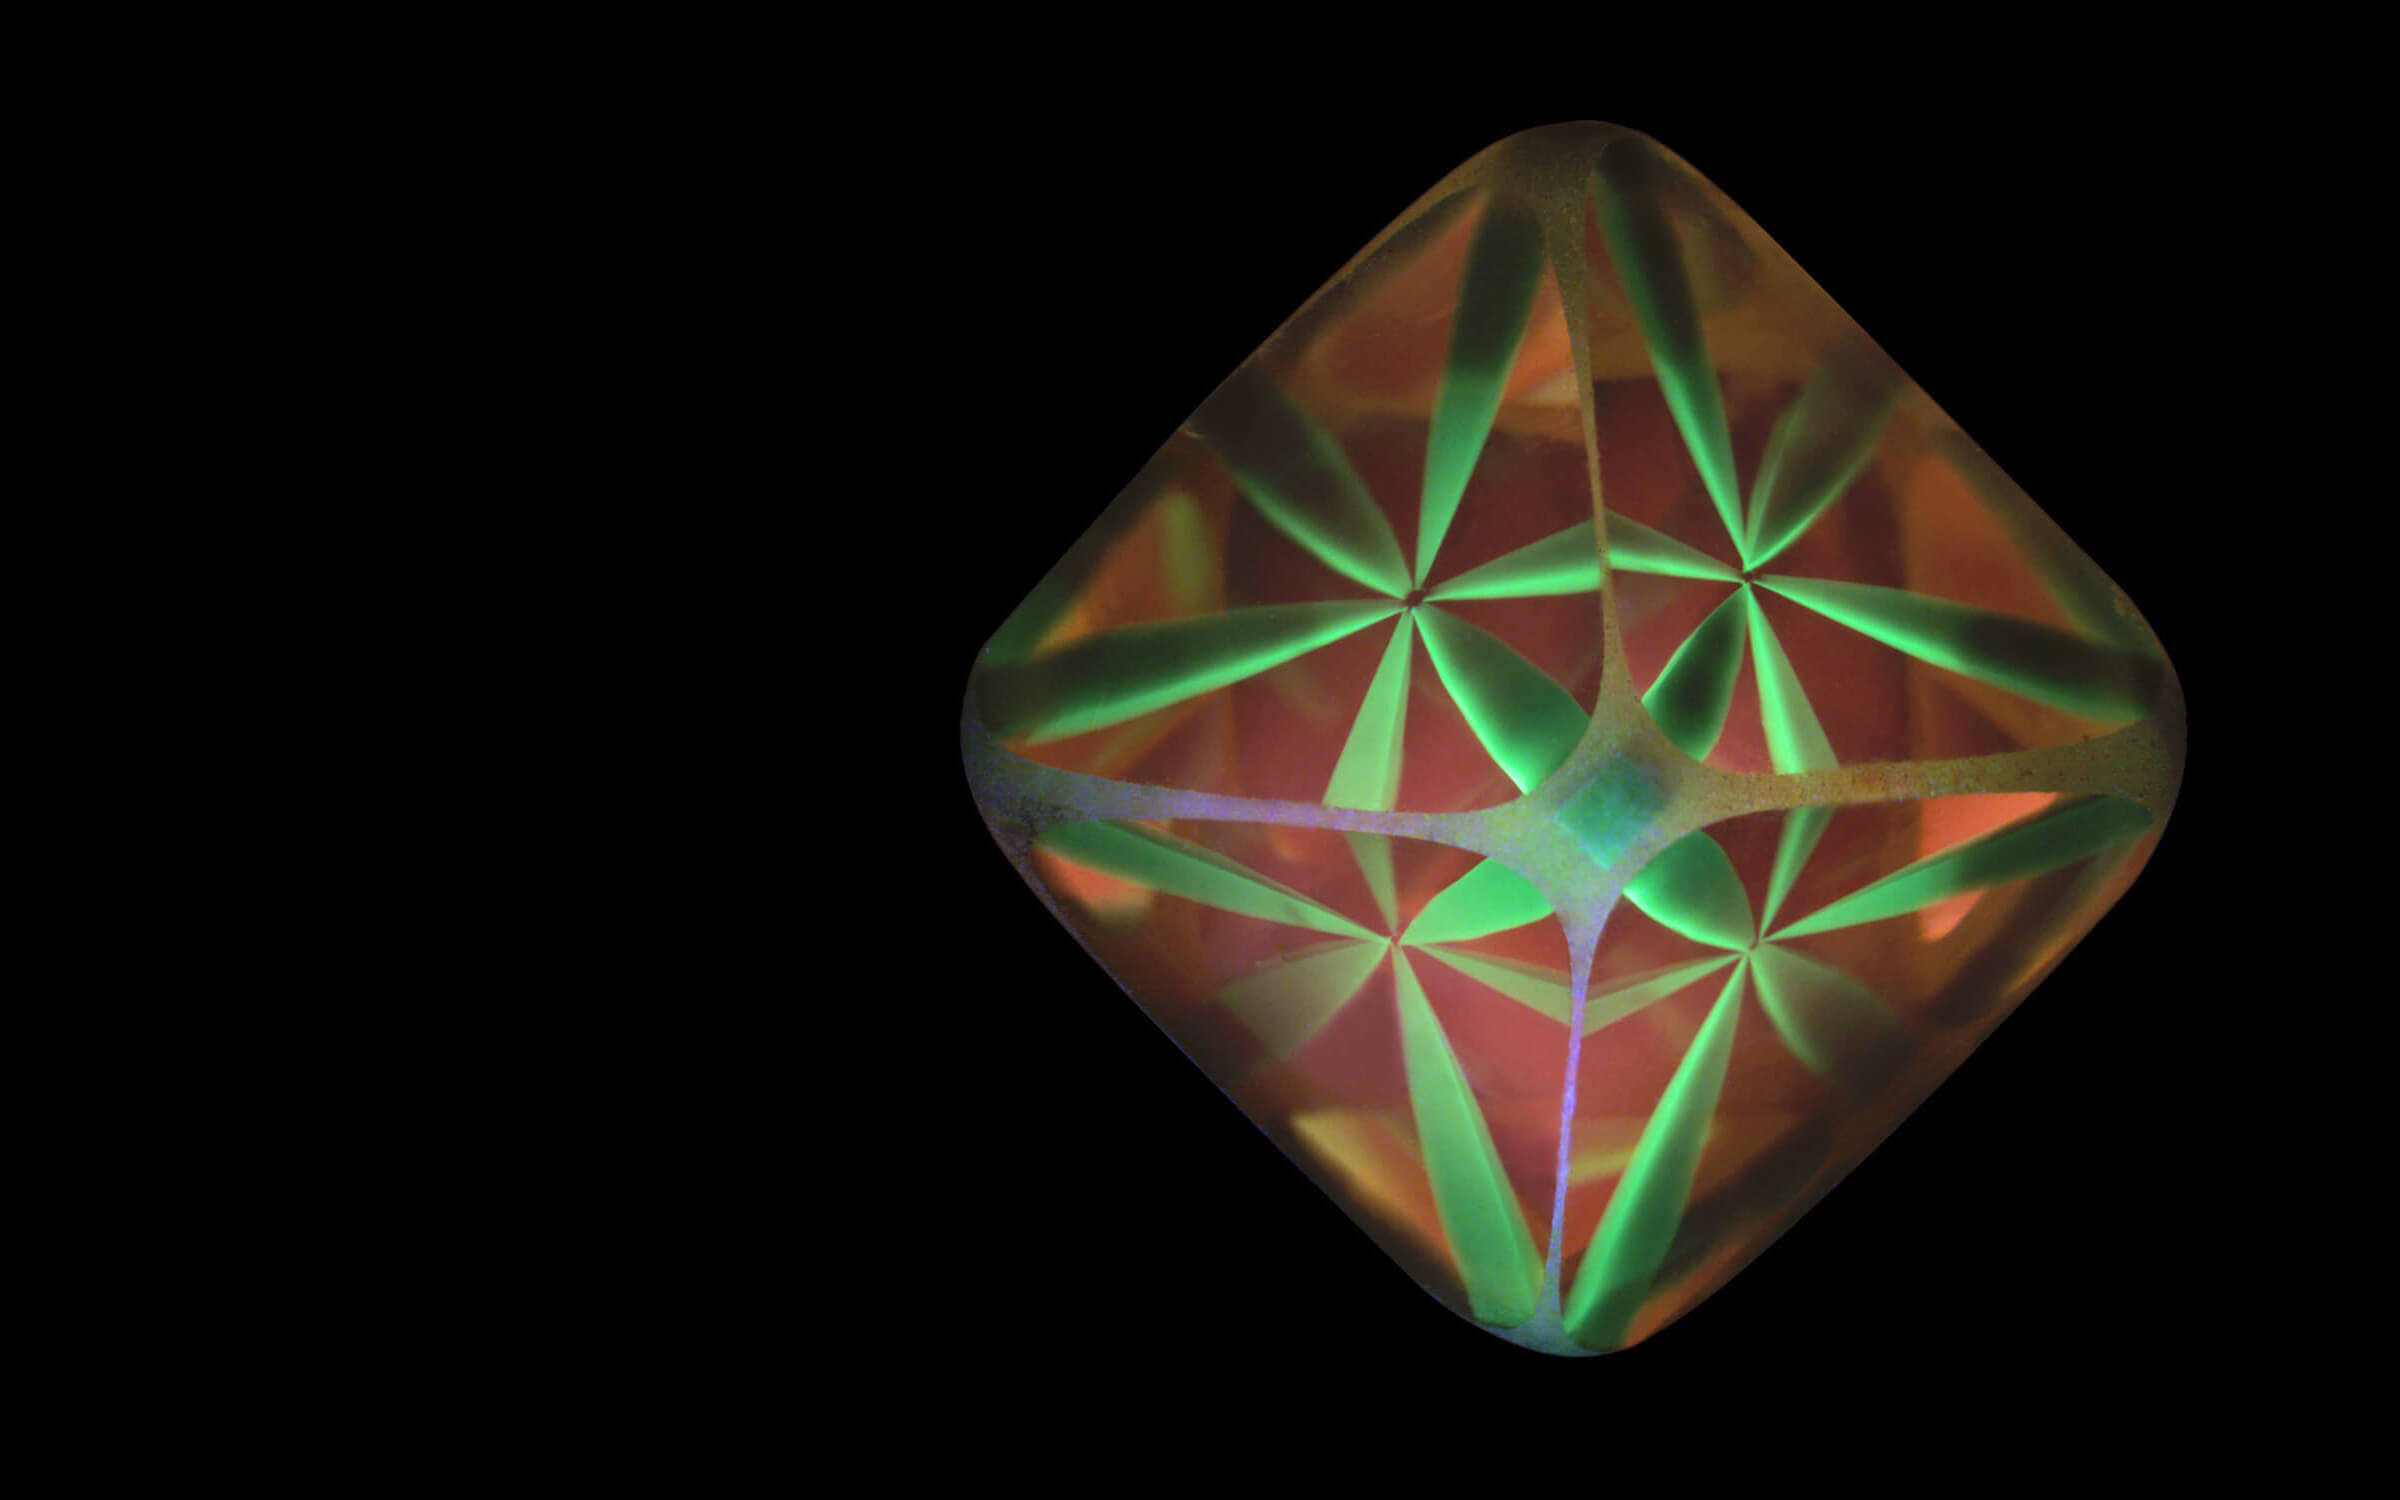 Structure luminescente bicolore dans un diamant brut